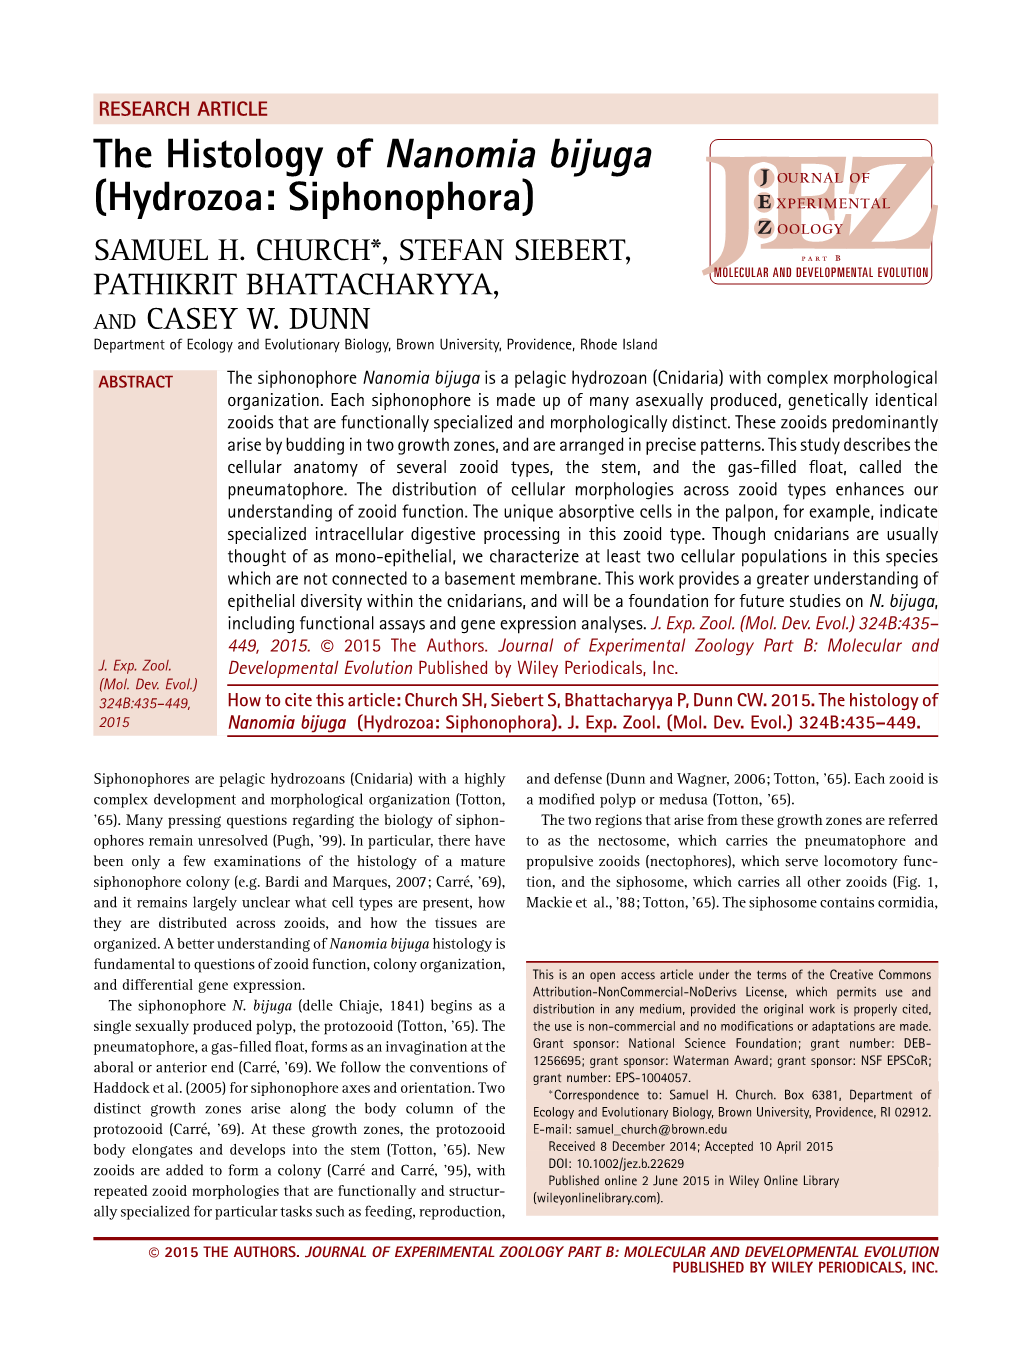 The Histology of Nanomia Bijuga (Hydrozoa: Siphonophora) SAMUEL H